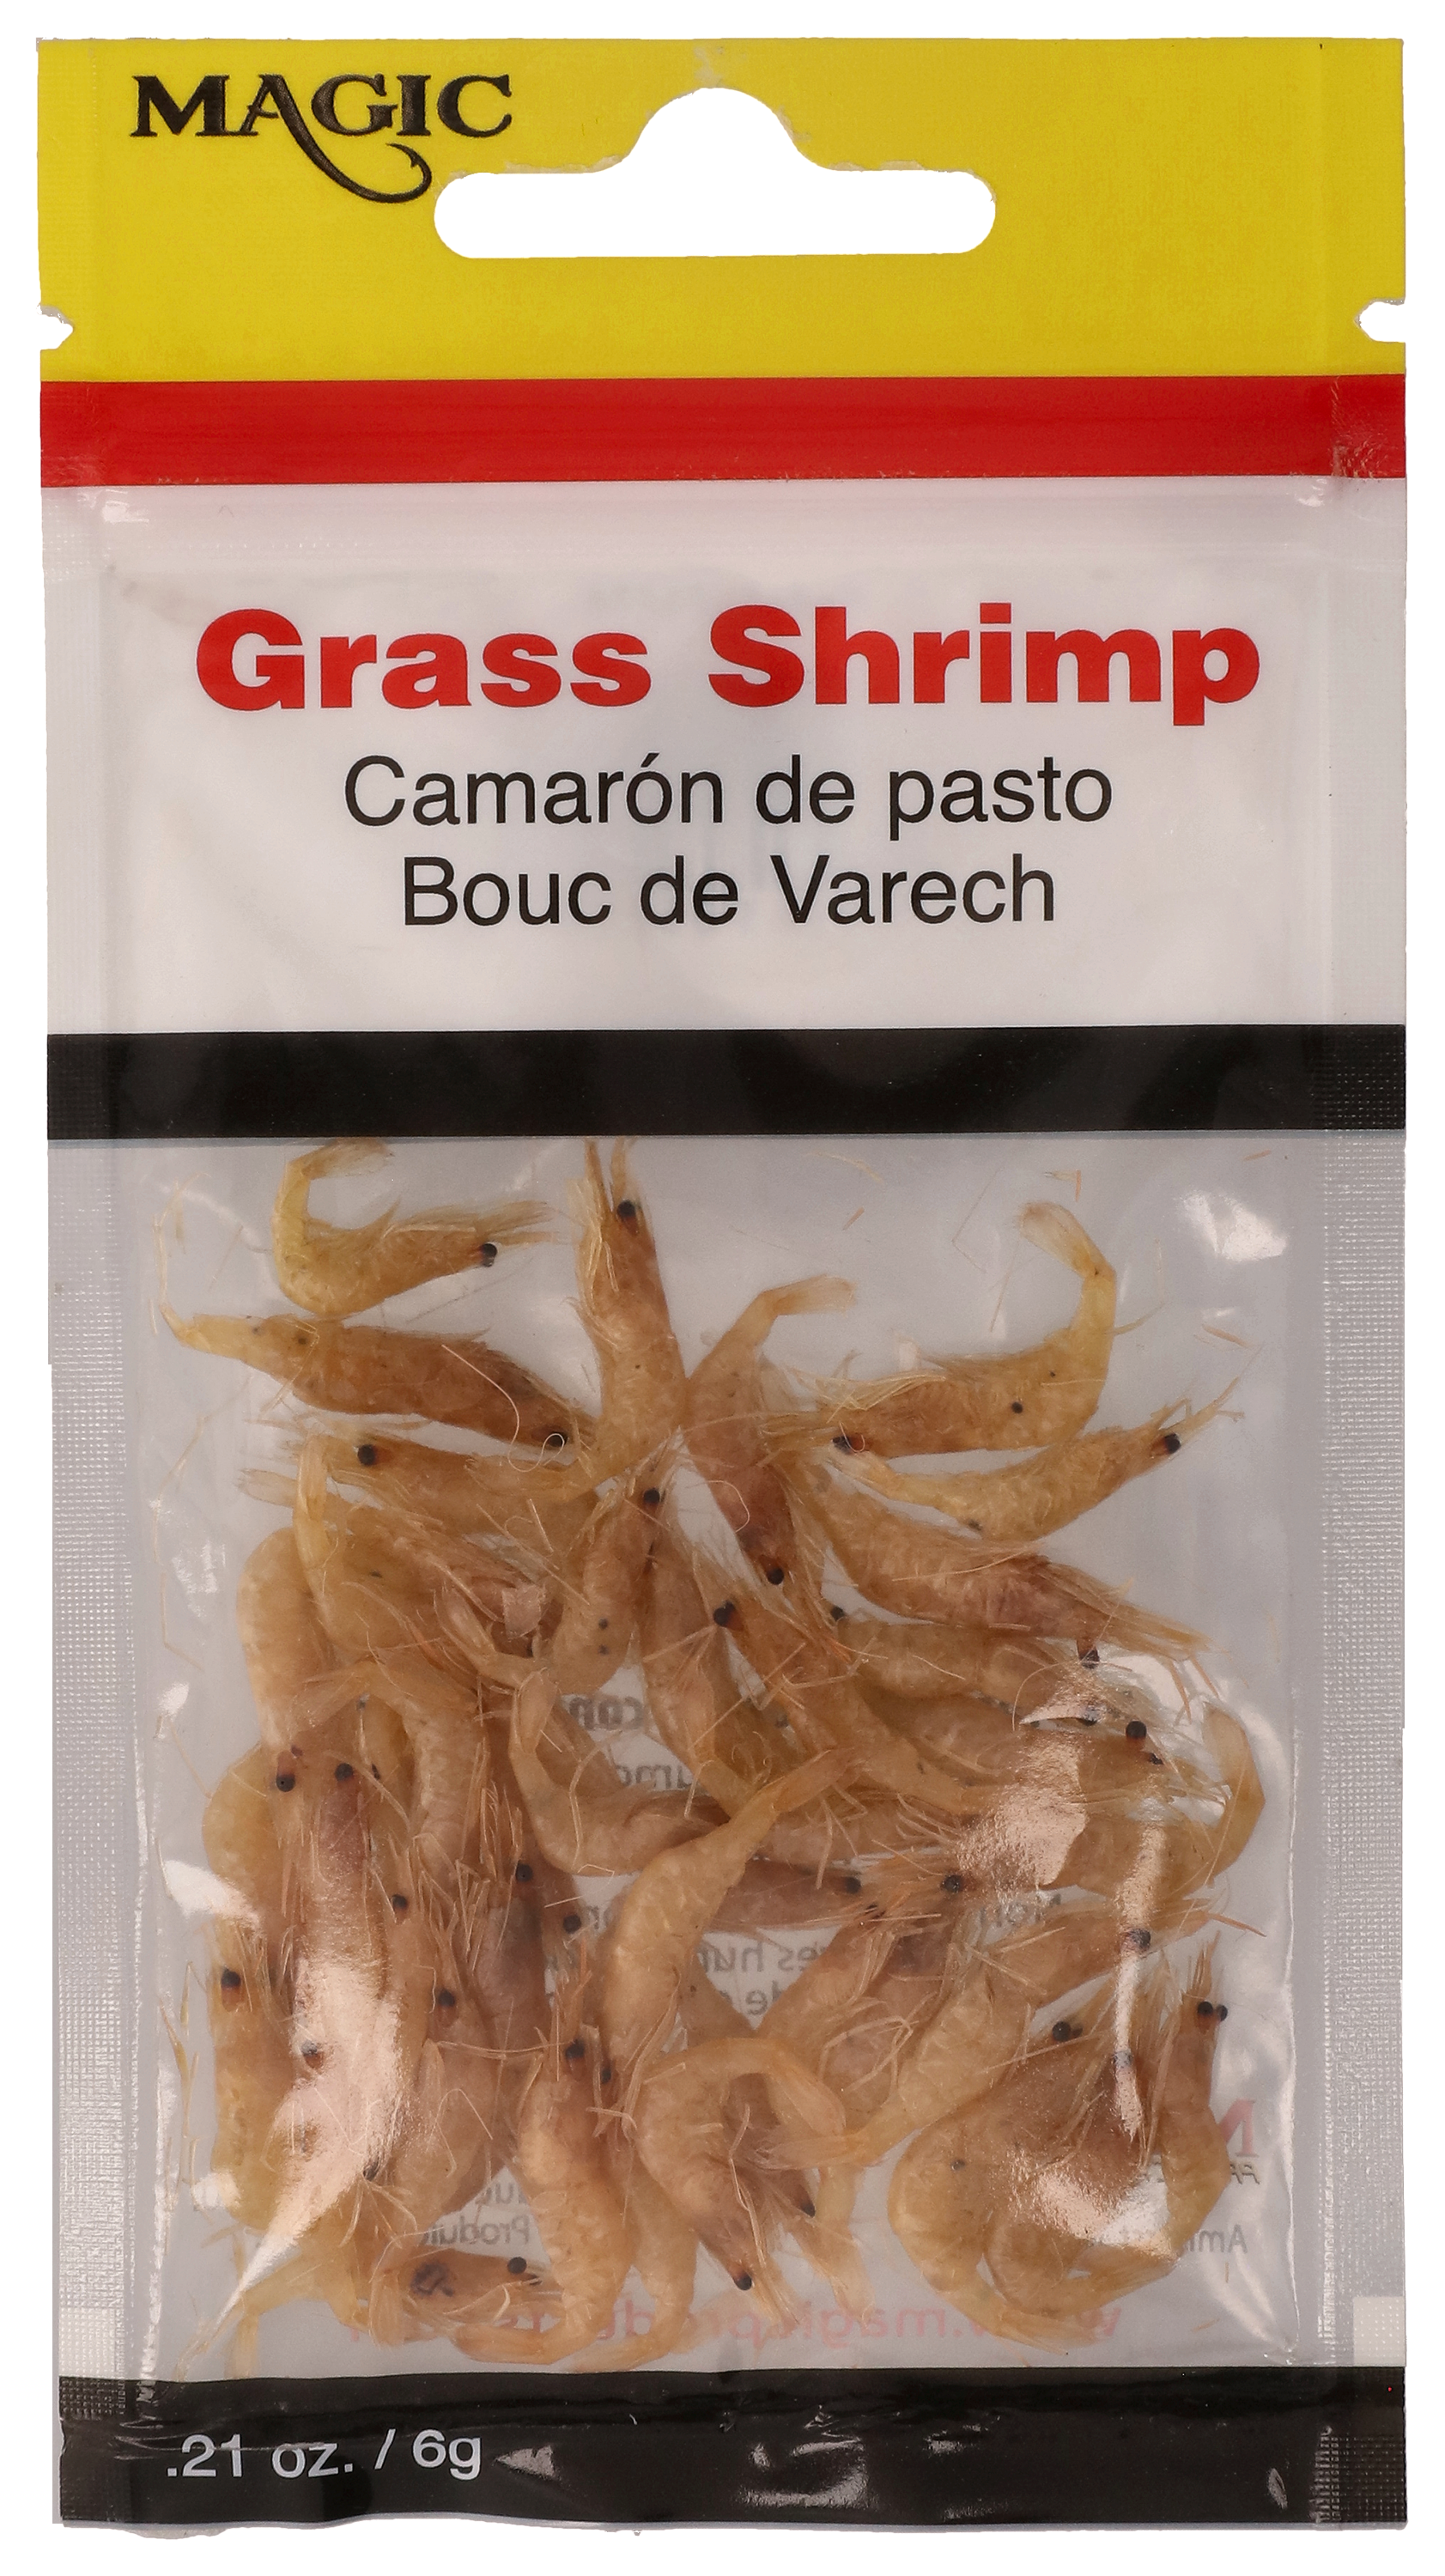 Shrimp Shrimpversatile Shrimp Scent Fish Attractant For All